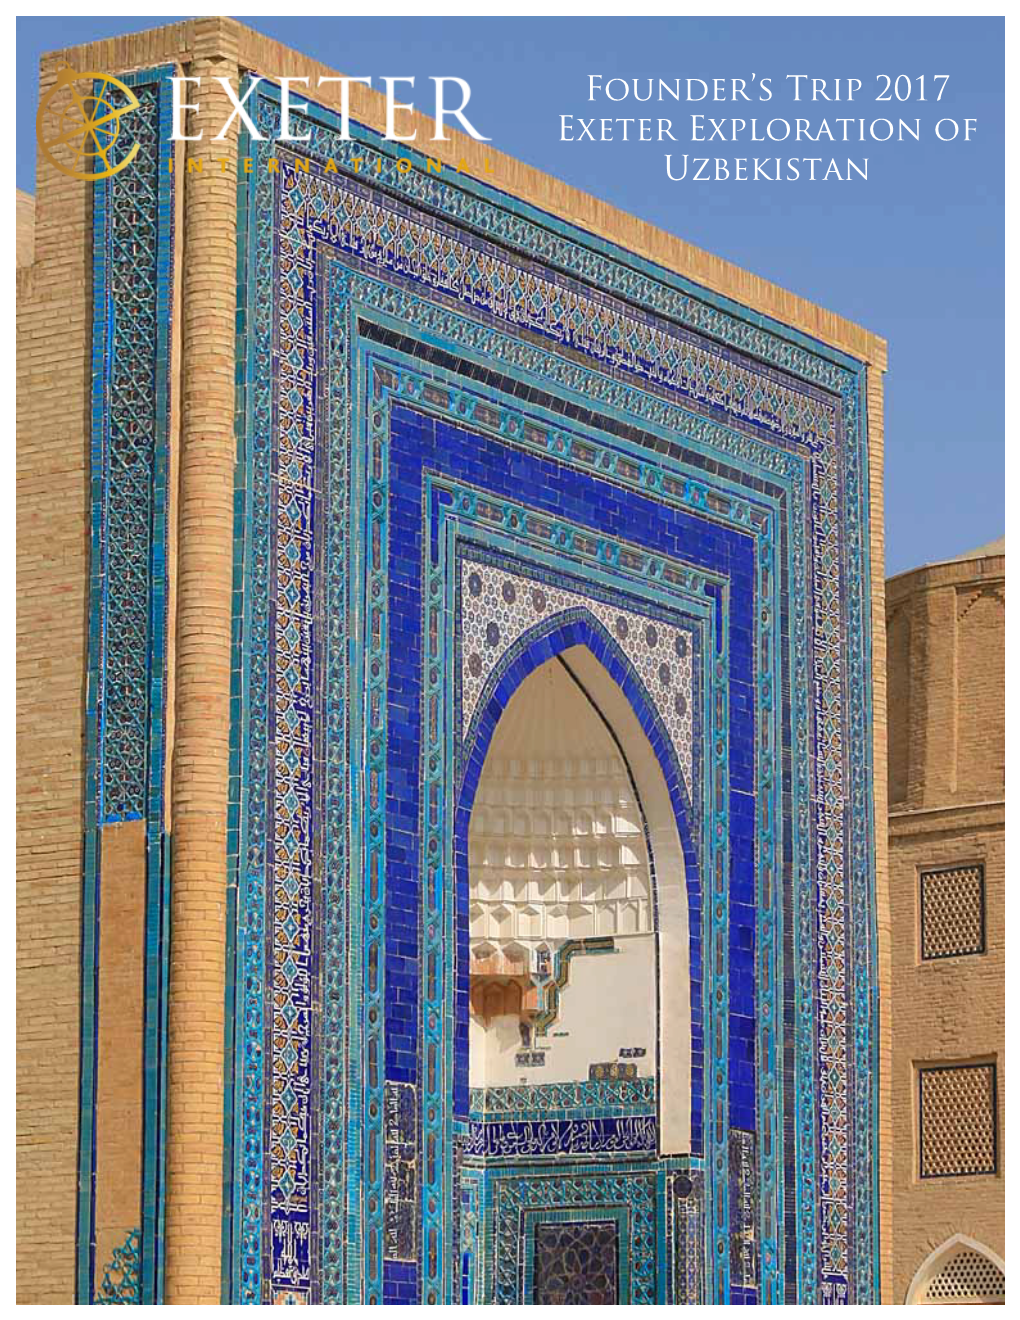 Founder's Trip 2017 Exeter Exploration of Uzbekistan